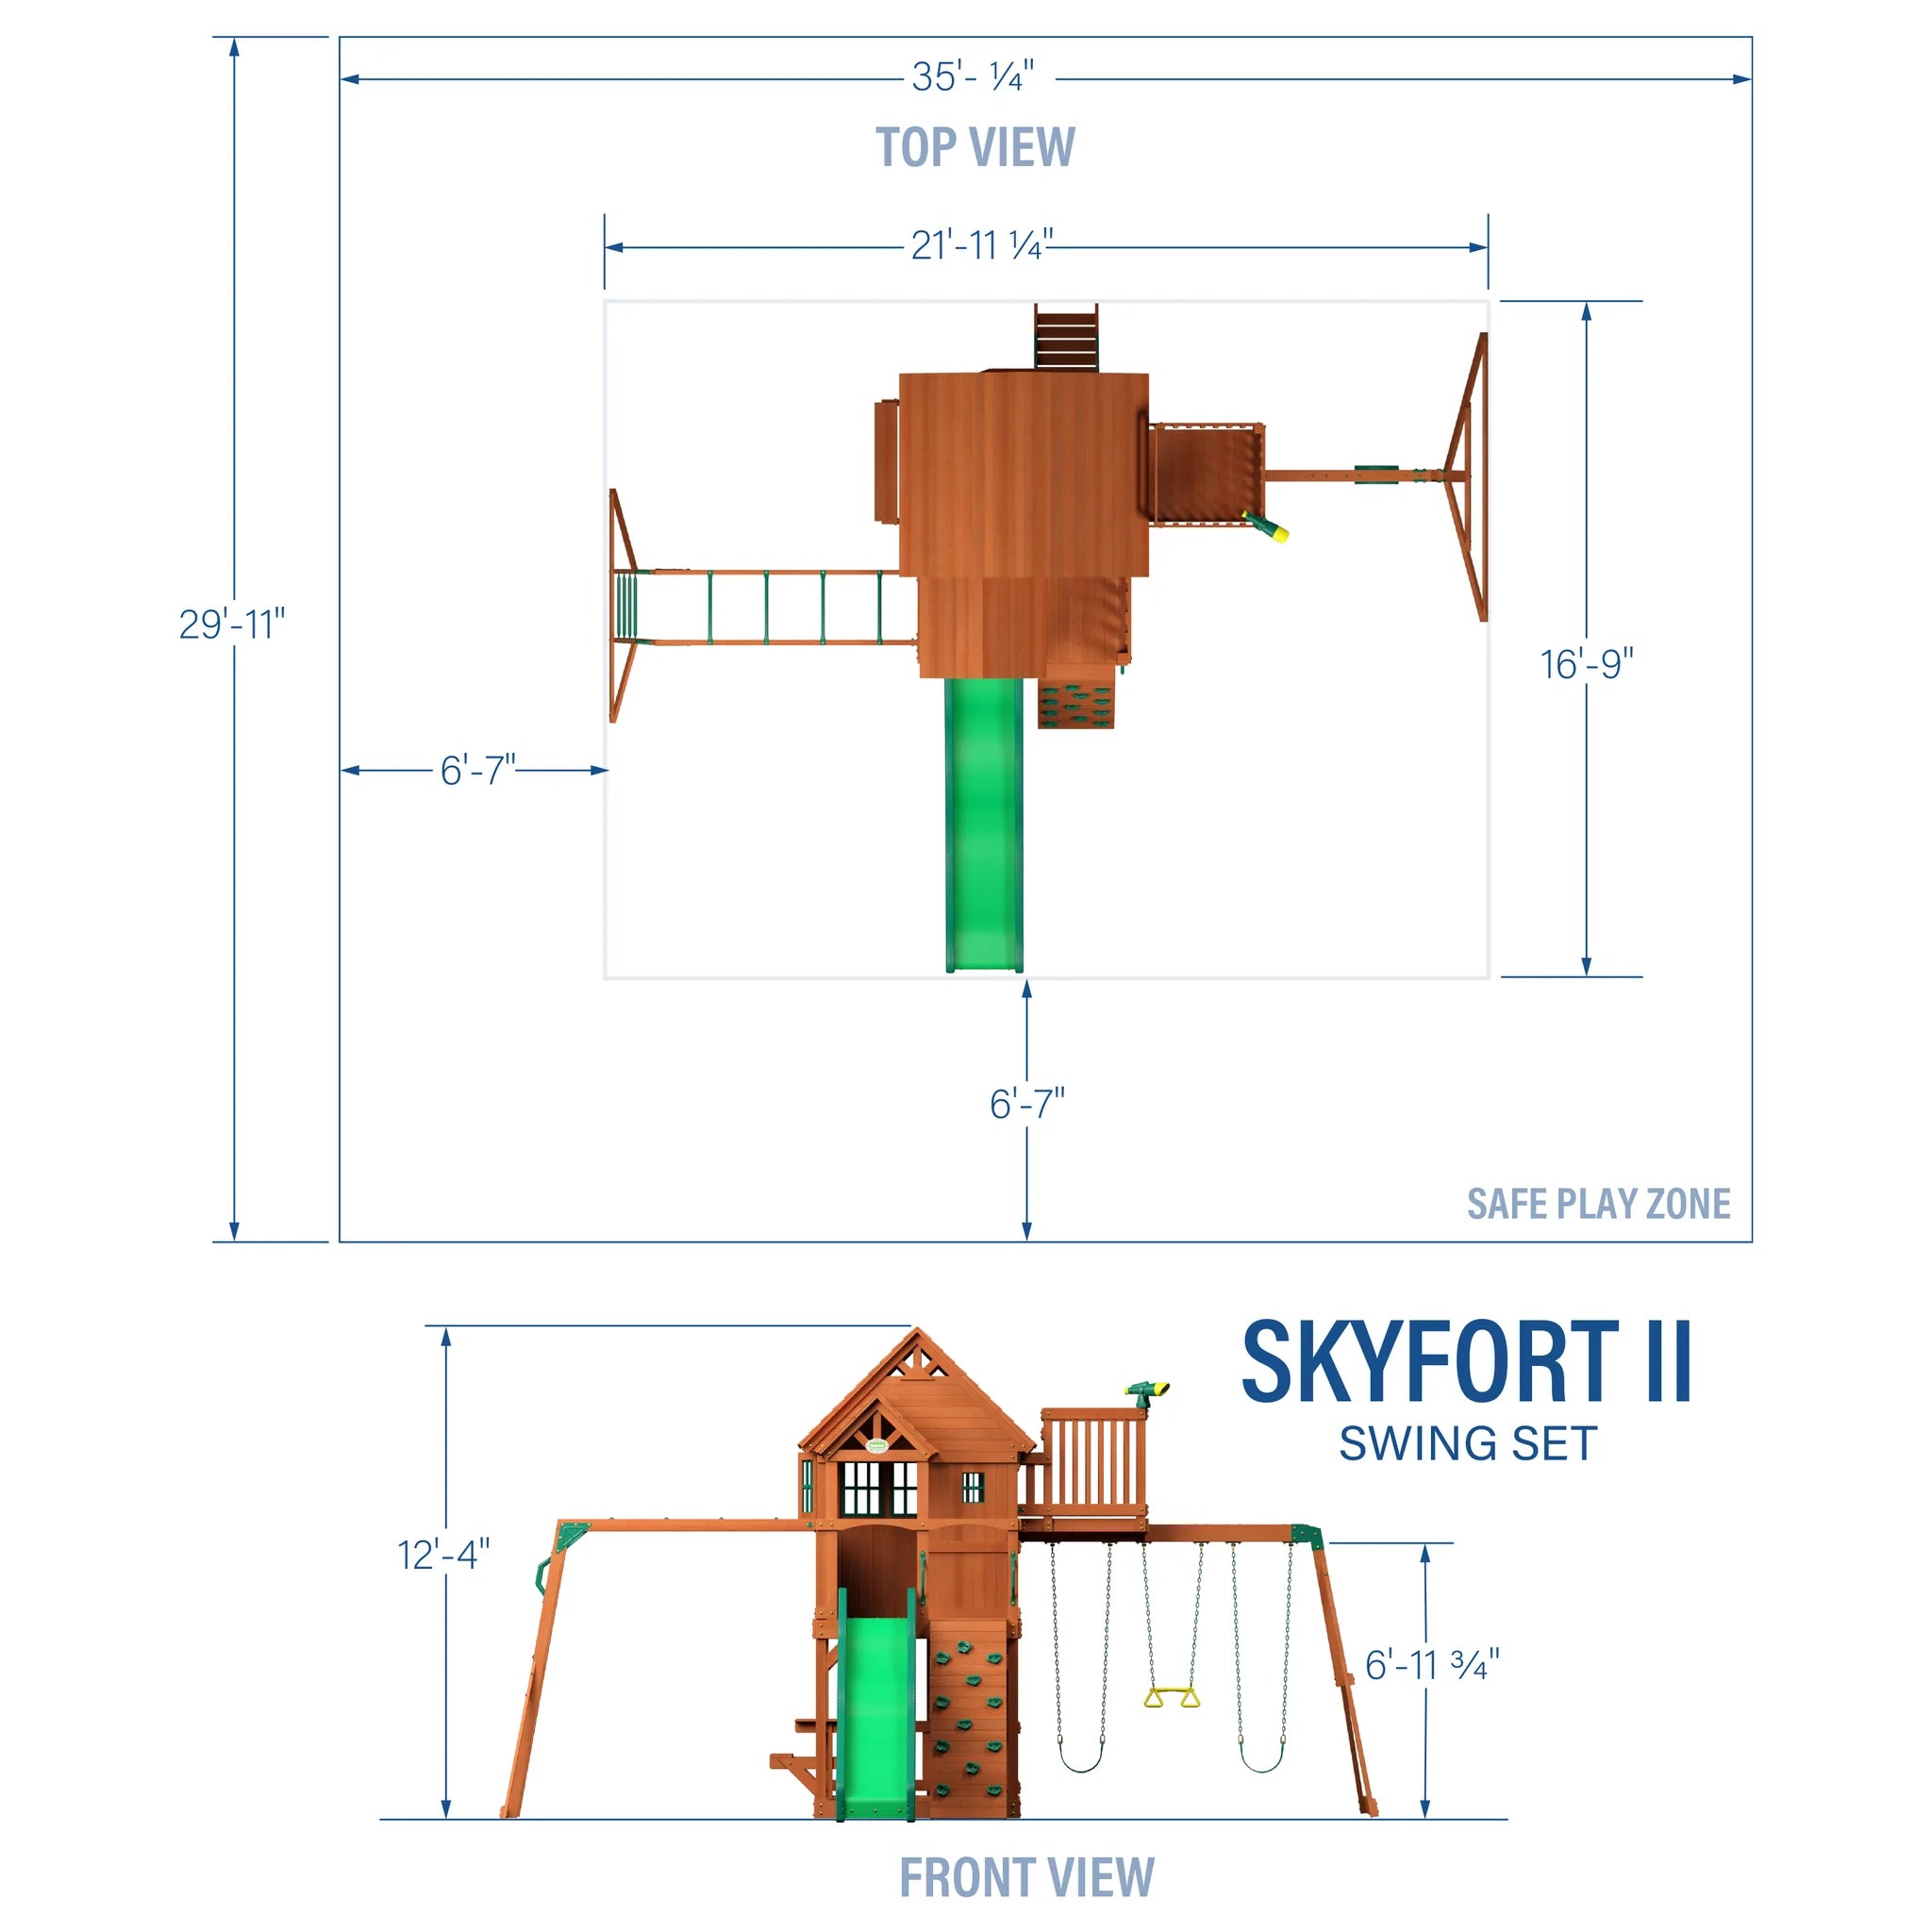 Skyfort II Swing Set